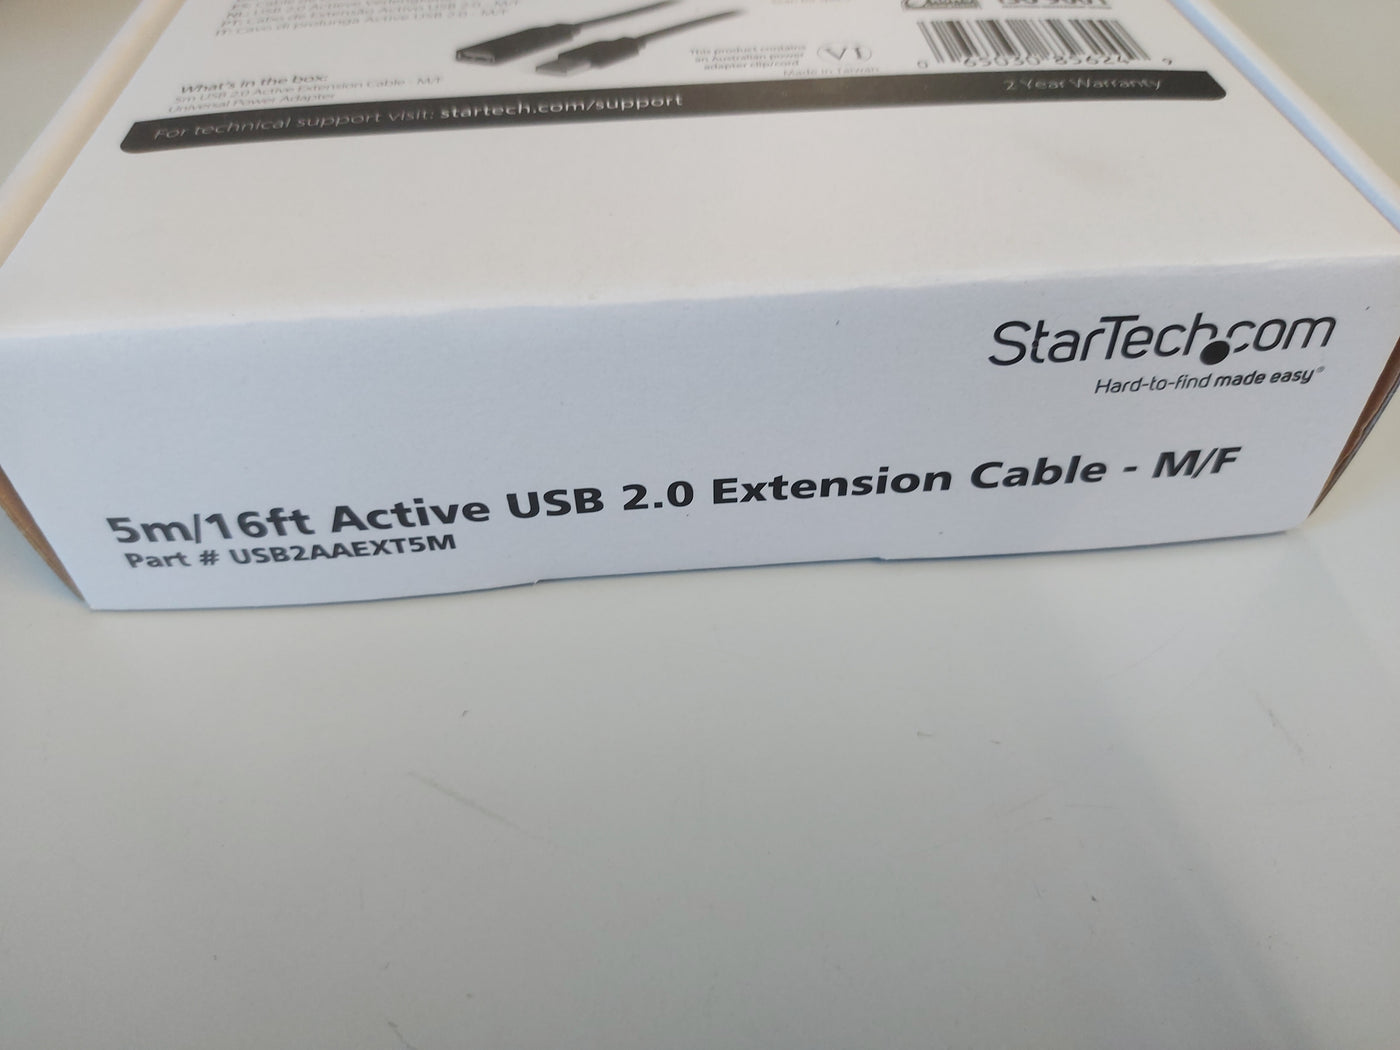 StarTech.com 5m/16ft Active USB 2.0 Extension Cable M/F ( USB2AAEXT5M ) NEW